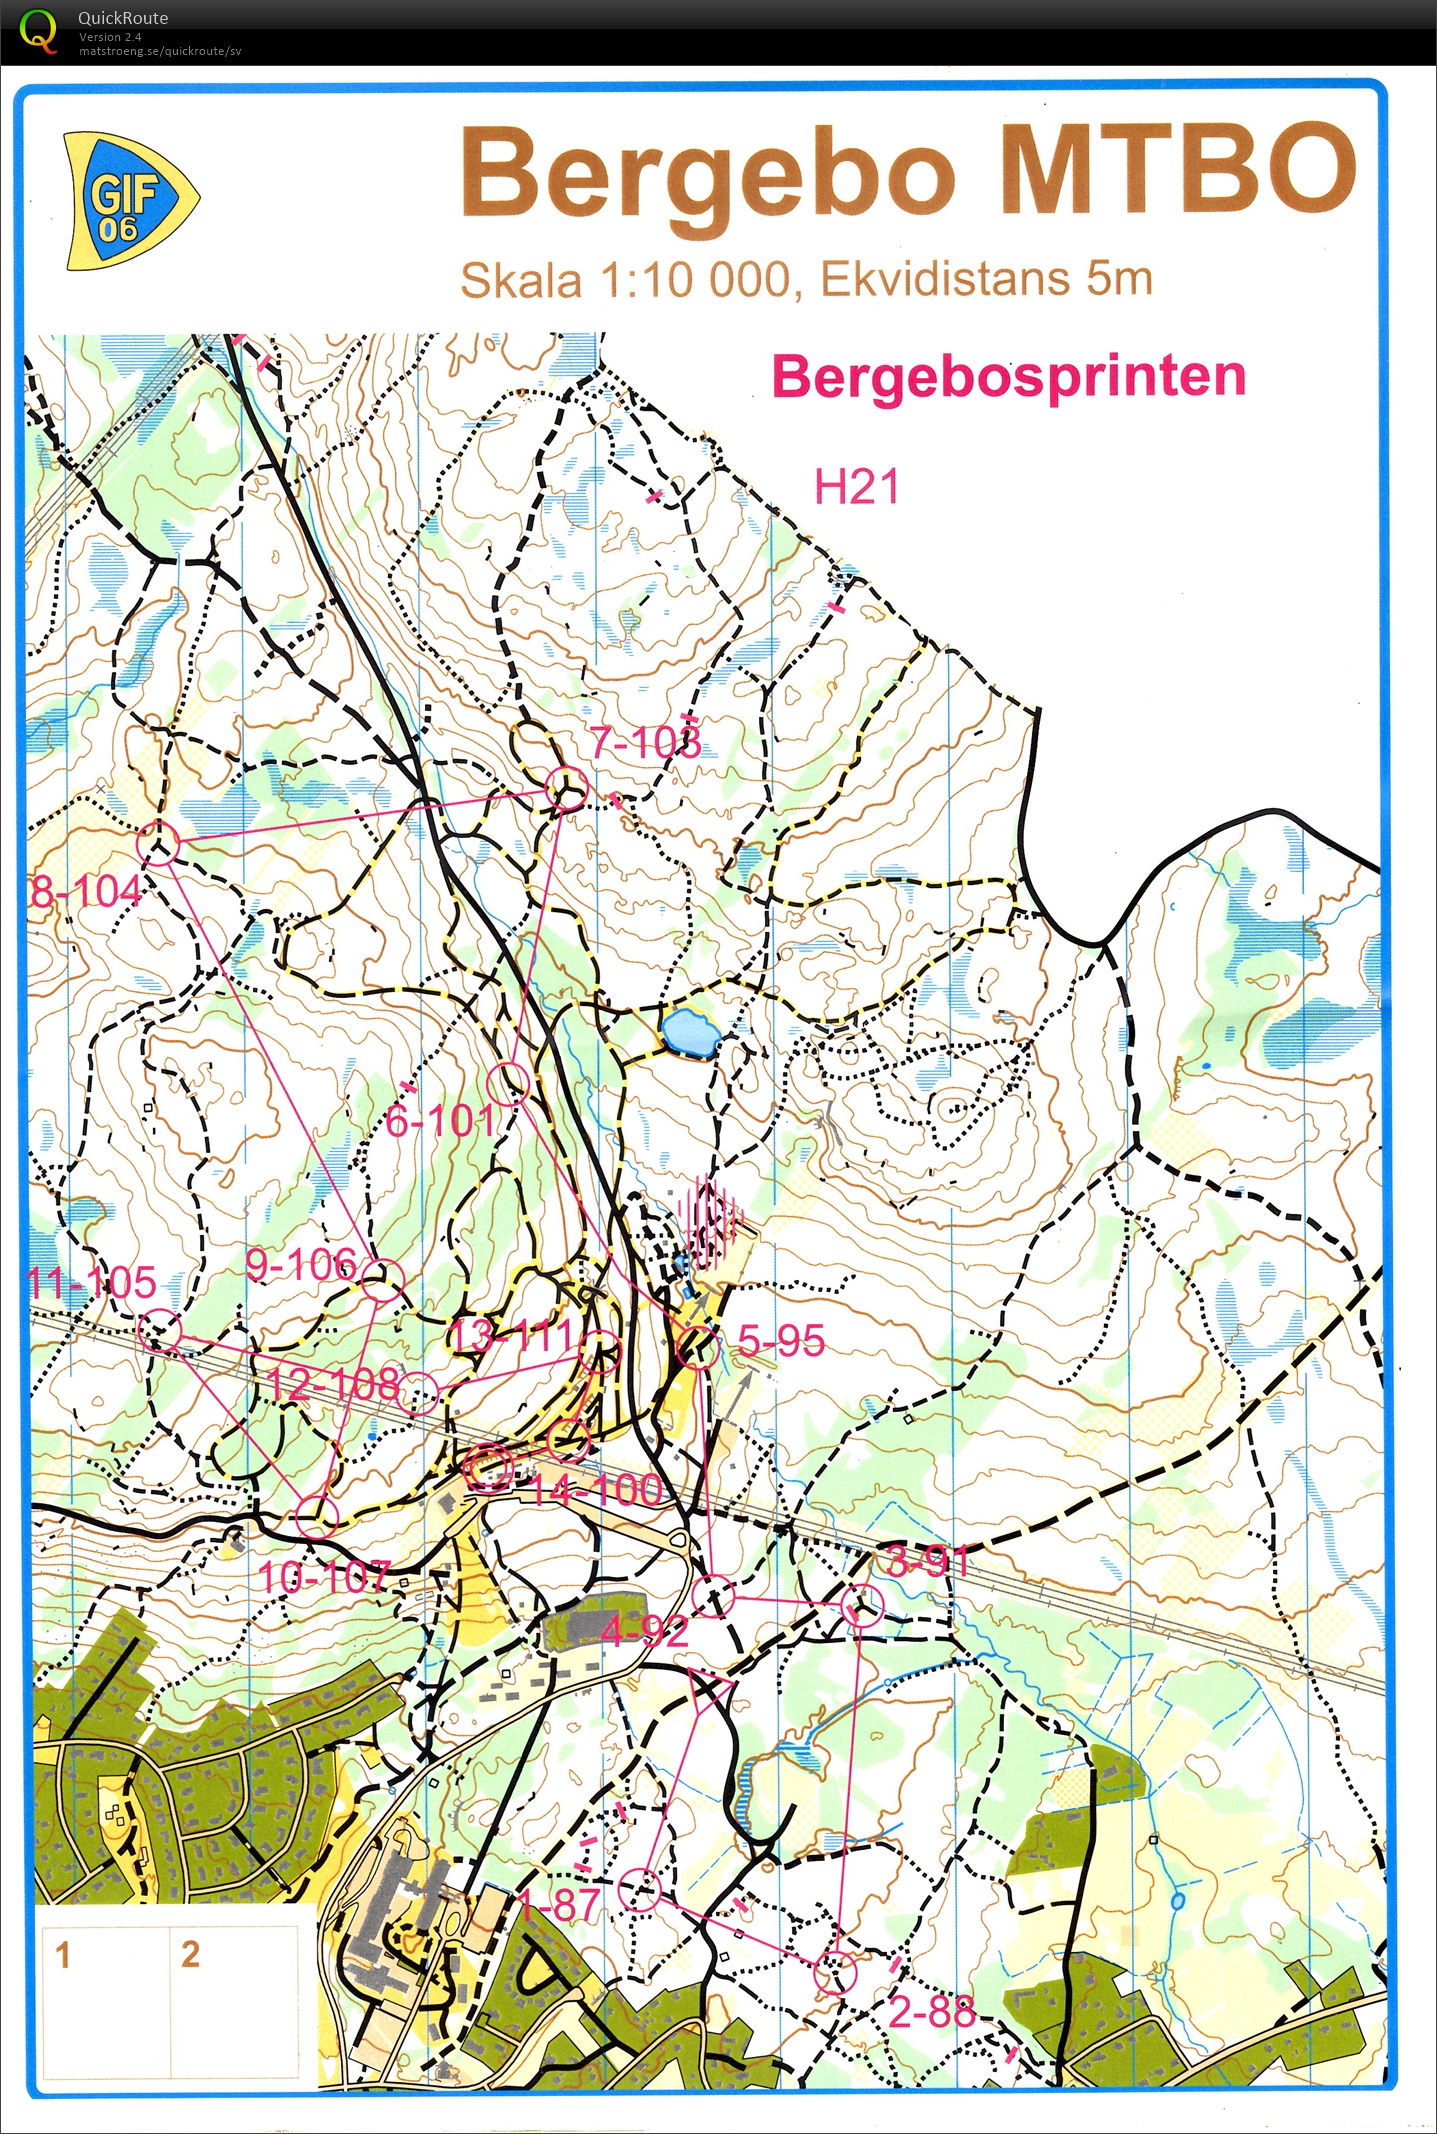 Bergebosprinten (17-05-2017)